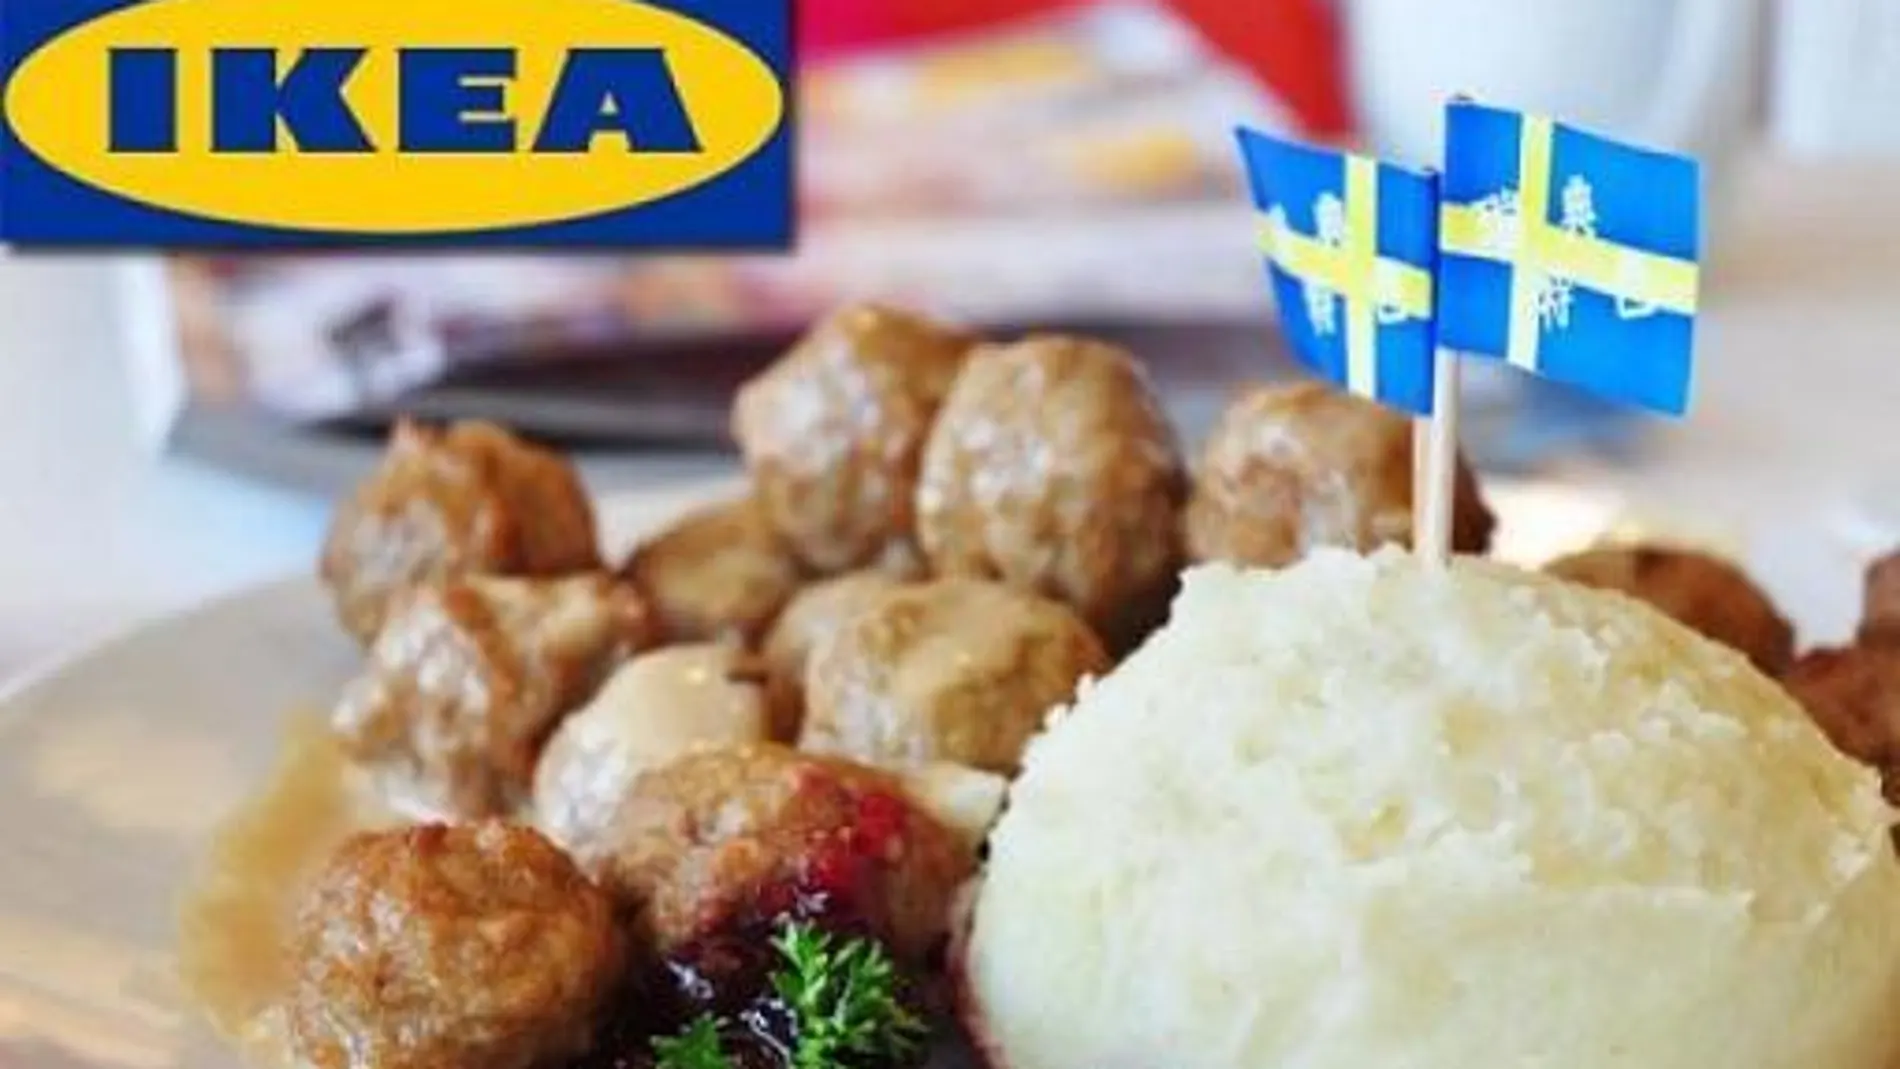 Ikea comparte la receta de sus famosas albóndigas